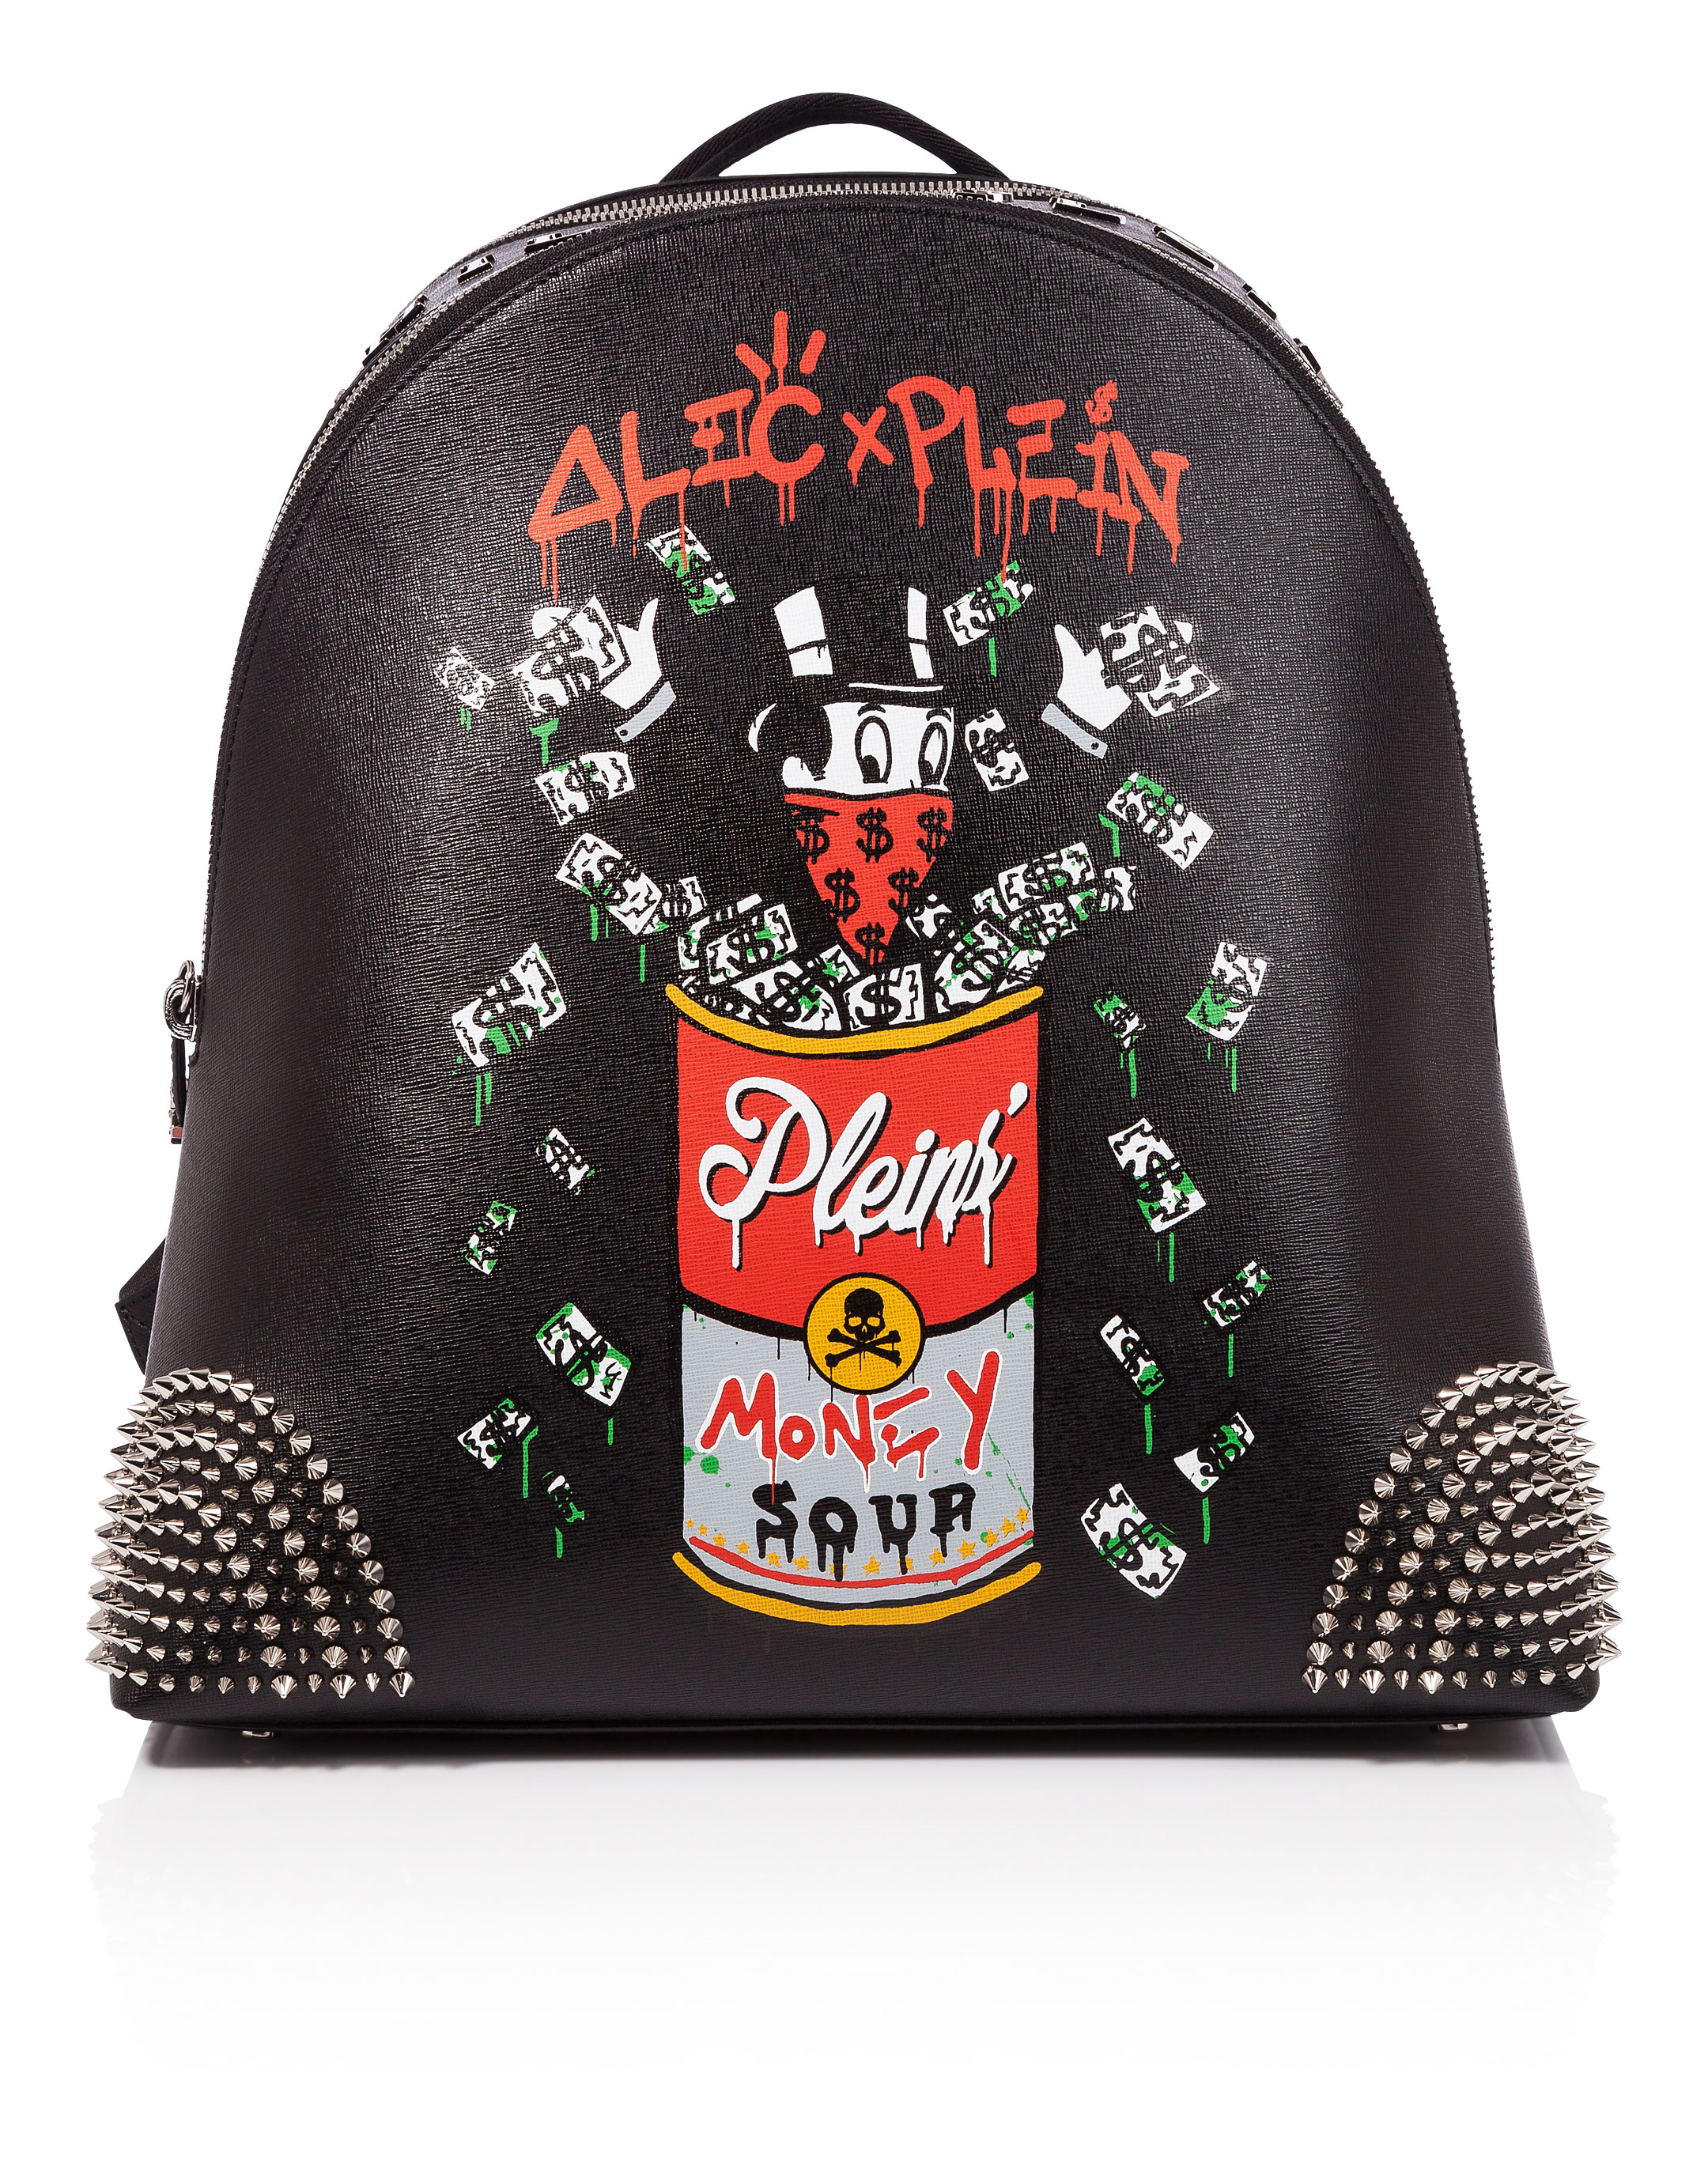 Backpack "Alec bp" | Philipp Plein Outlet